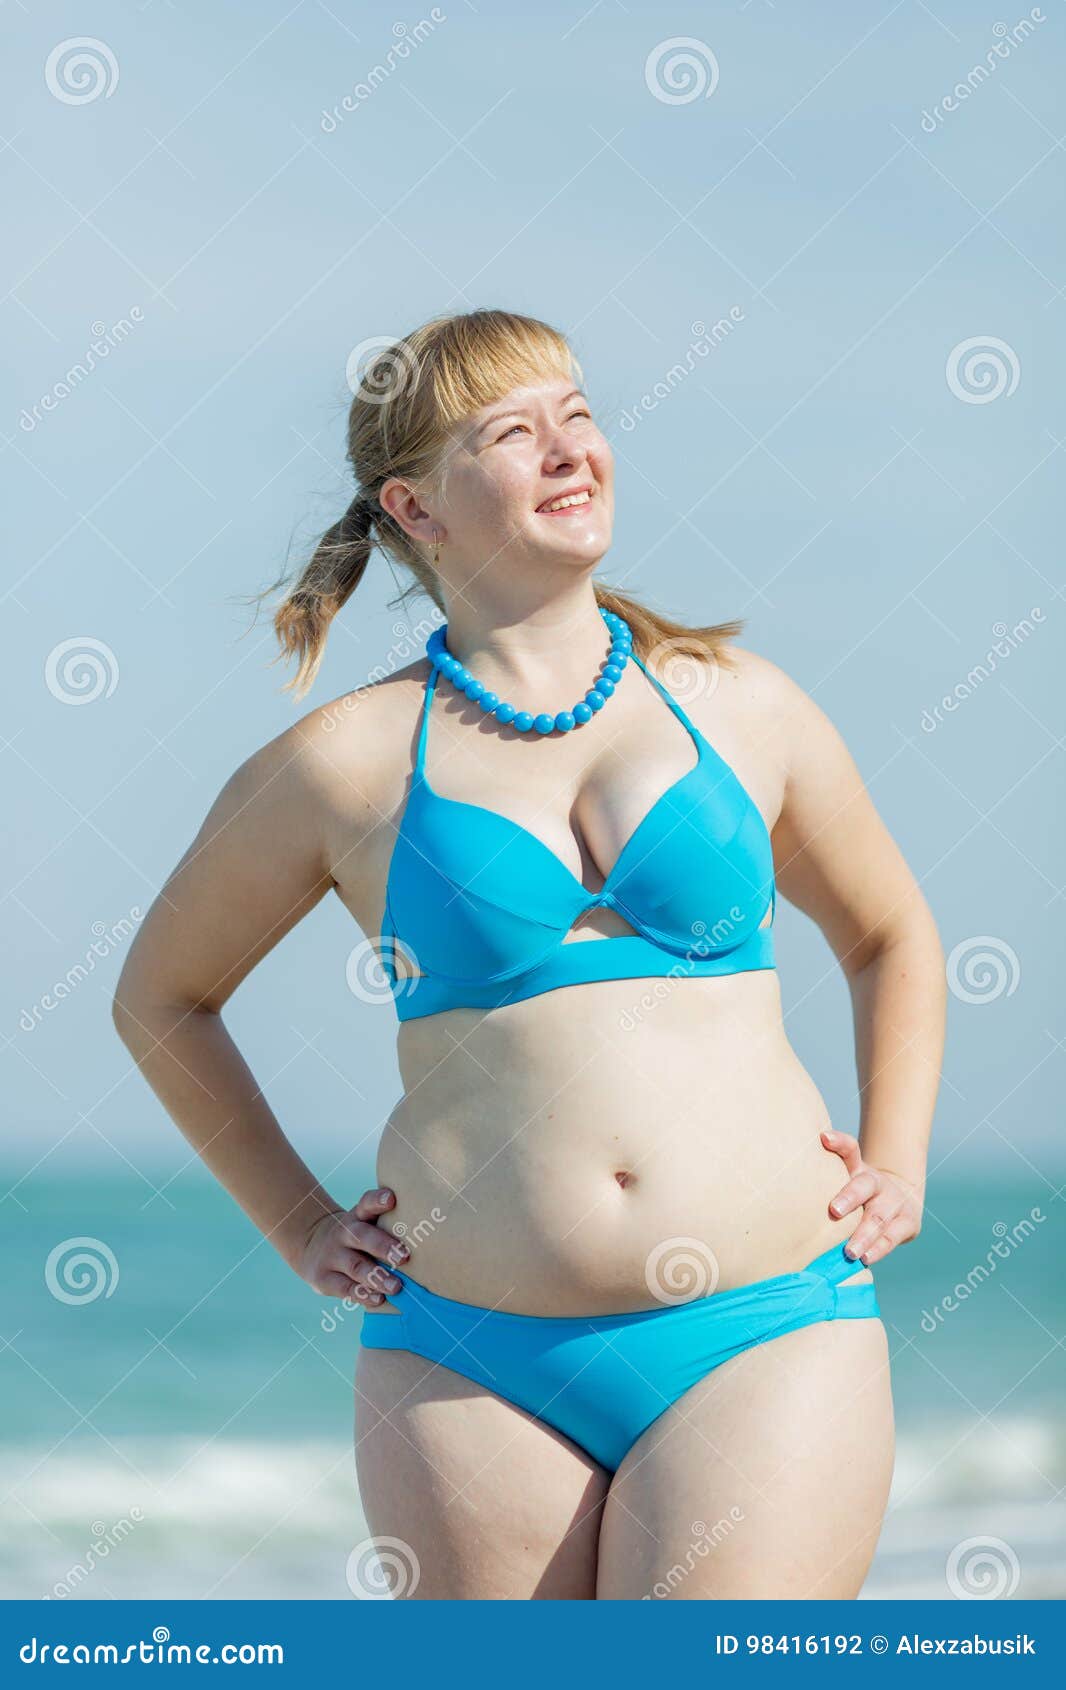 804 Middle Aged Woman Bikini Stock Photos